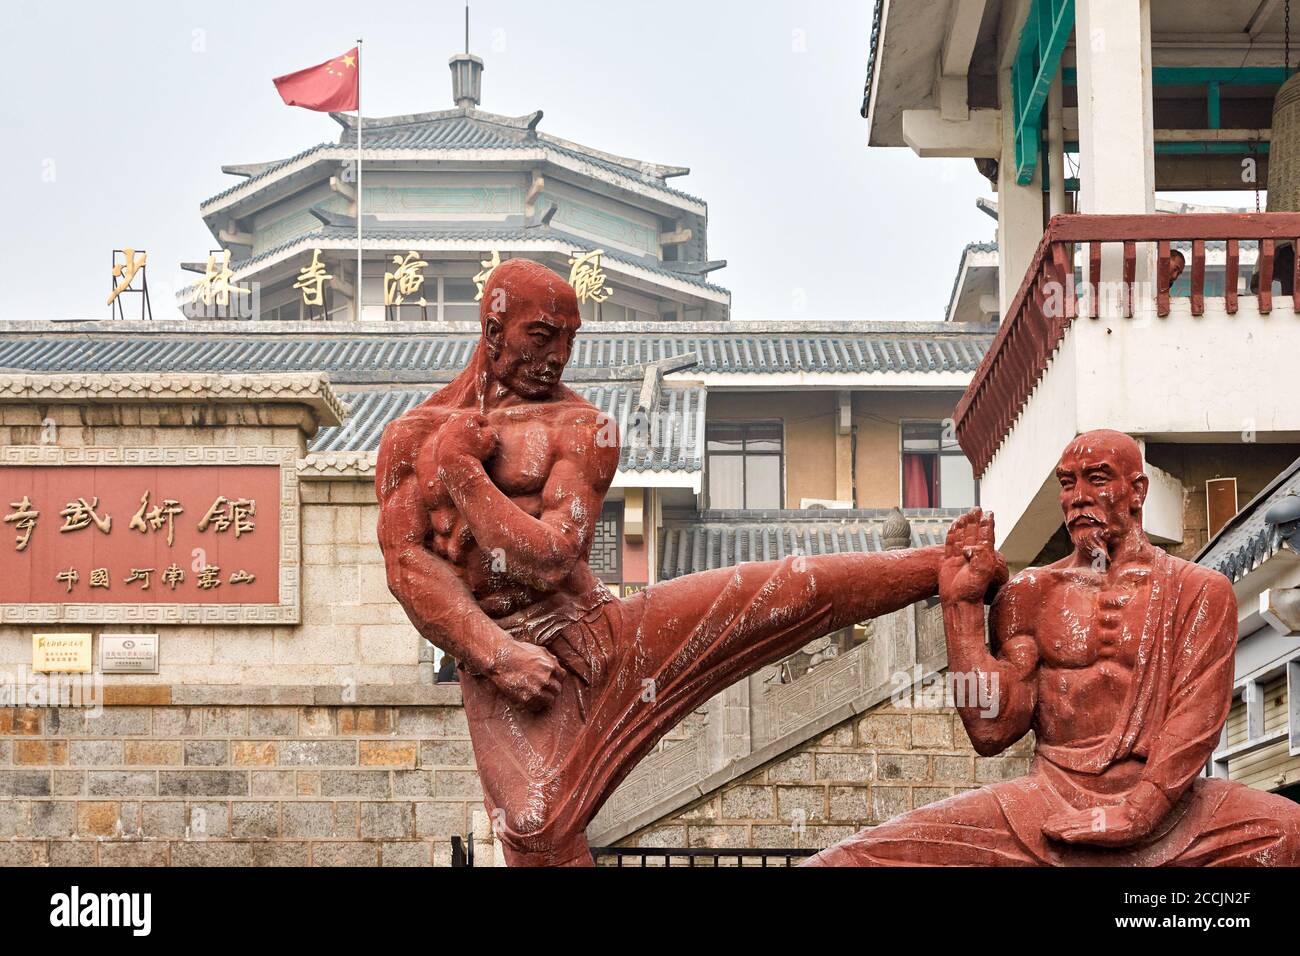 shaolin-luoyang-provincia-de-henan-china-4-de-enero-de-2016-arte-marcial-famoso-templo-budista-shaolin-en-luoyang-china-2ccjn2f.jpg